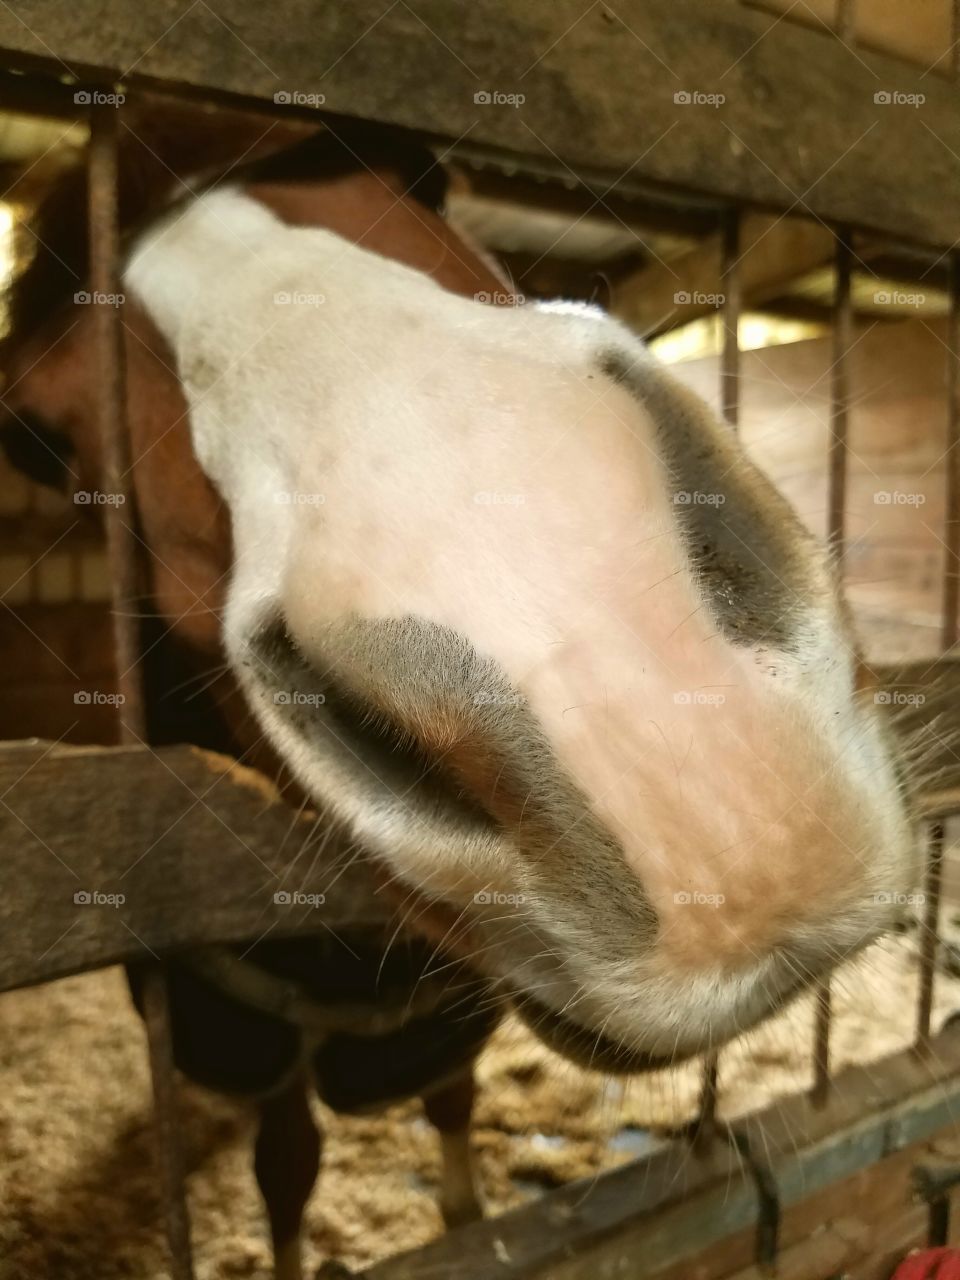 horse closeup smelling hand